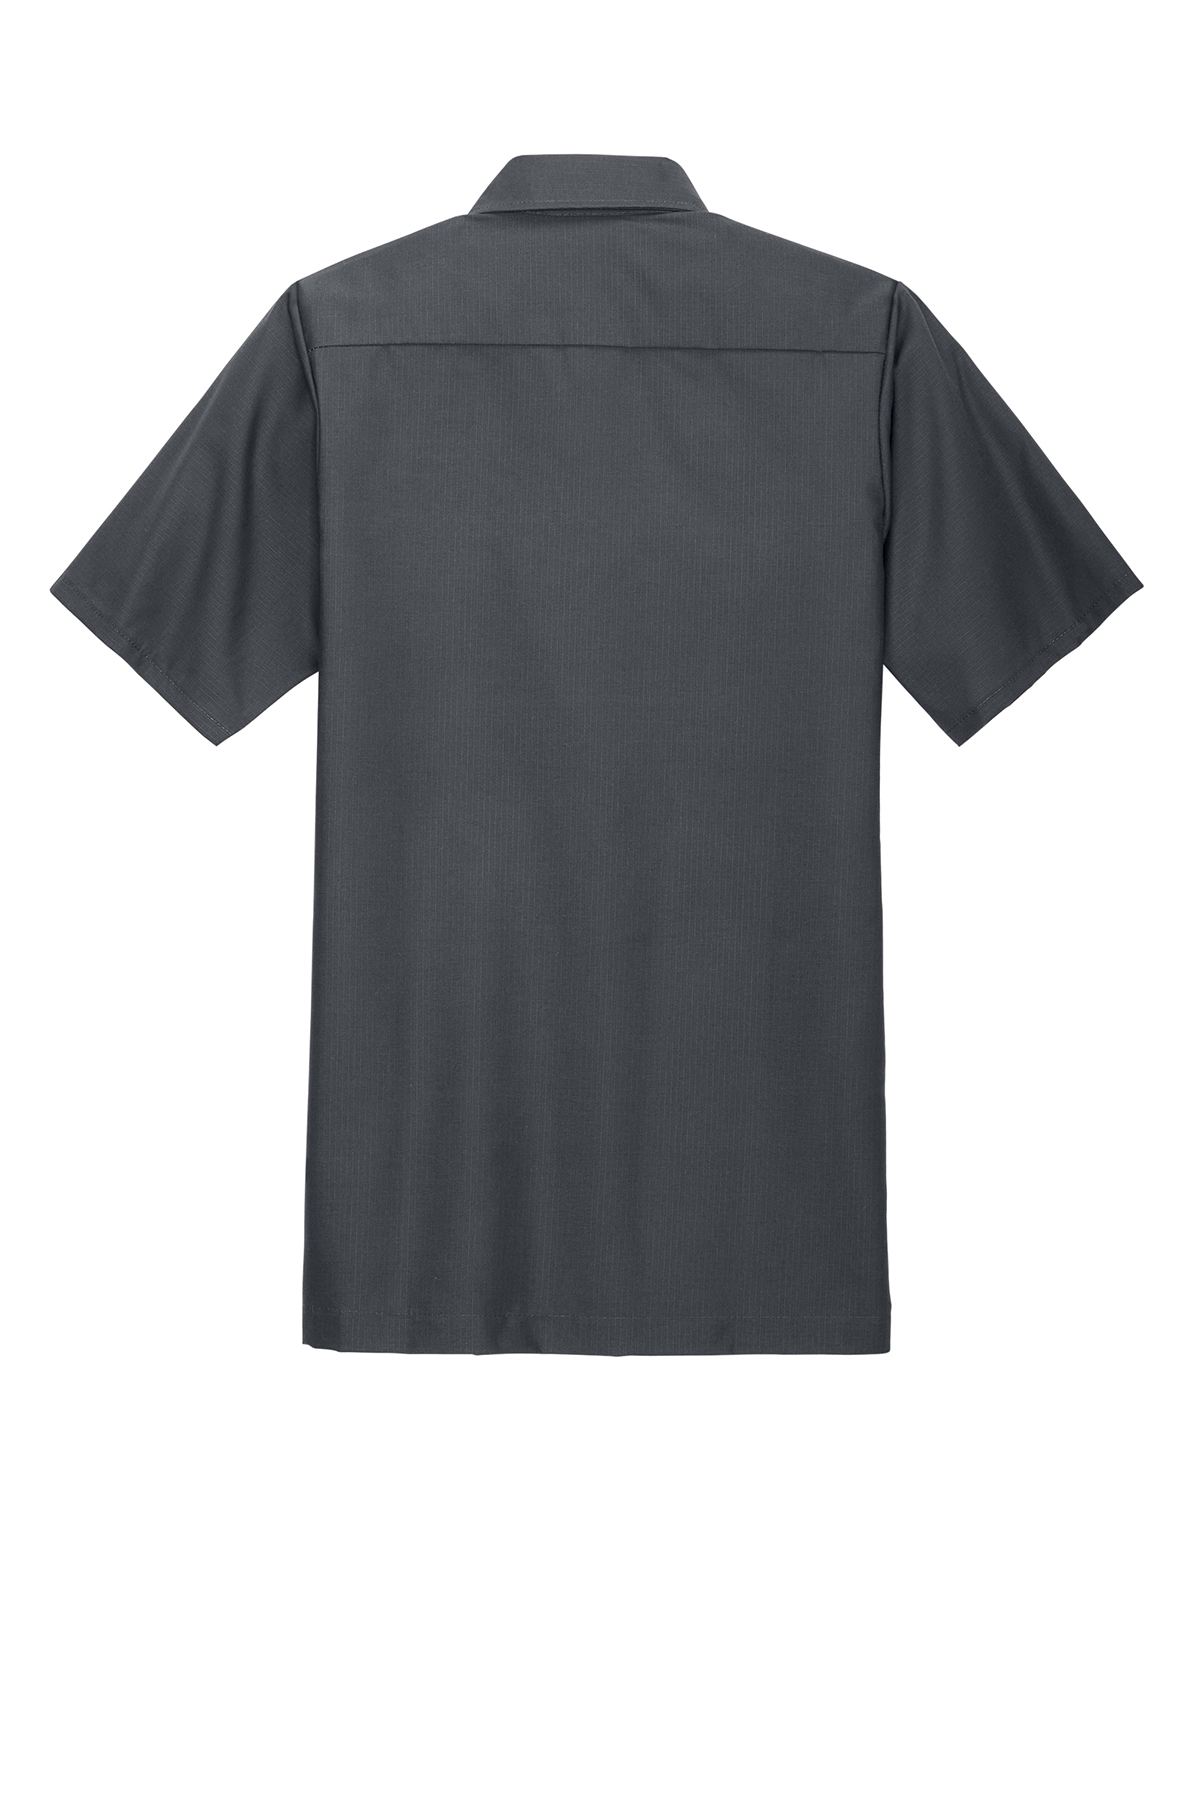 Red Kap ® Short Sleeve Solid Ripstop Shirt | Product | SanMar